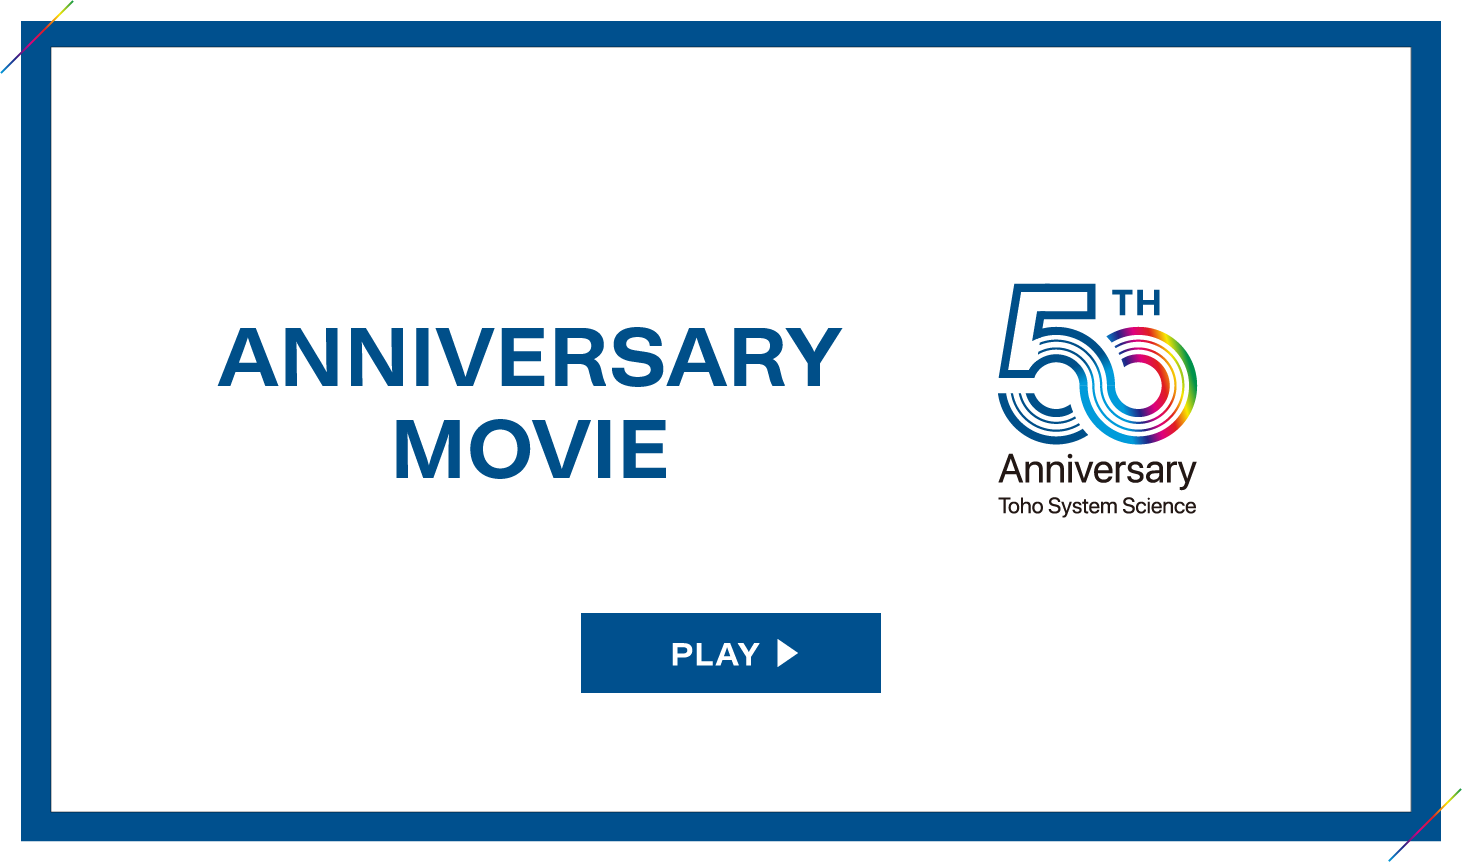 ANNIVERSARY MOVIE PLAY 50TH Anniversary Toho System Science